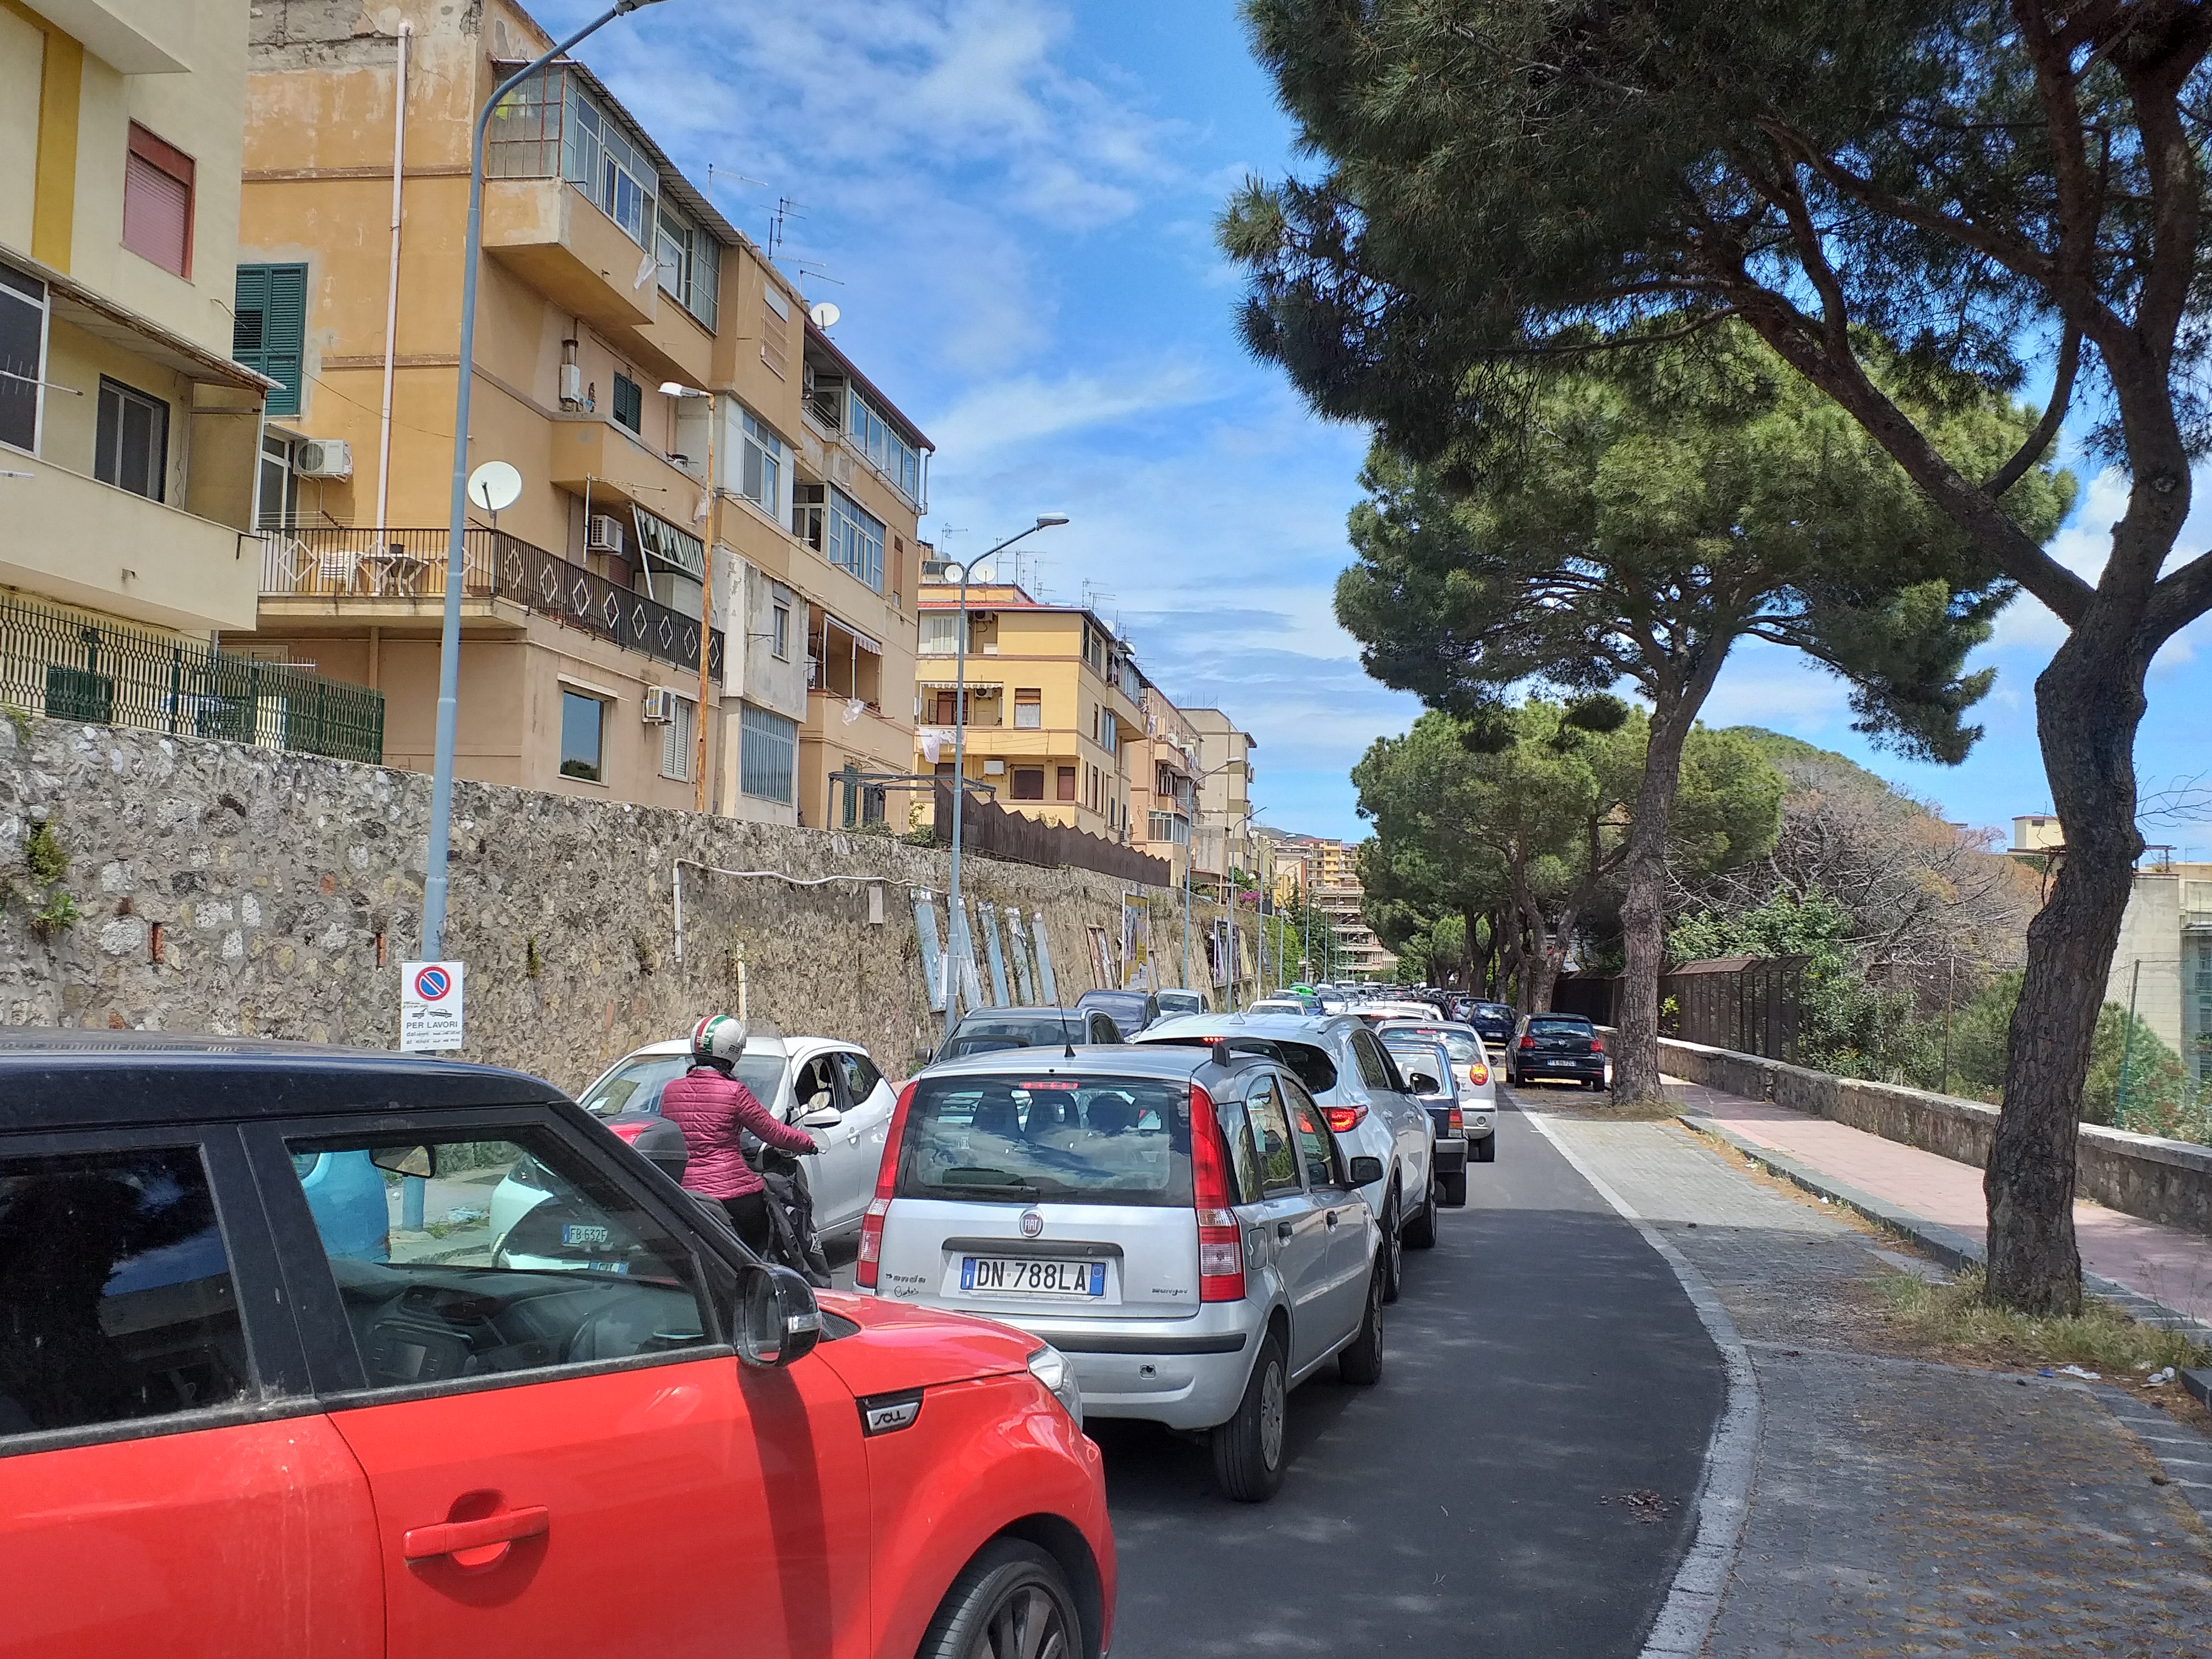 Messina tra le più "congestionate" d'Italia